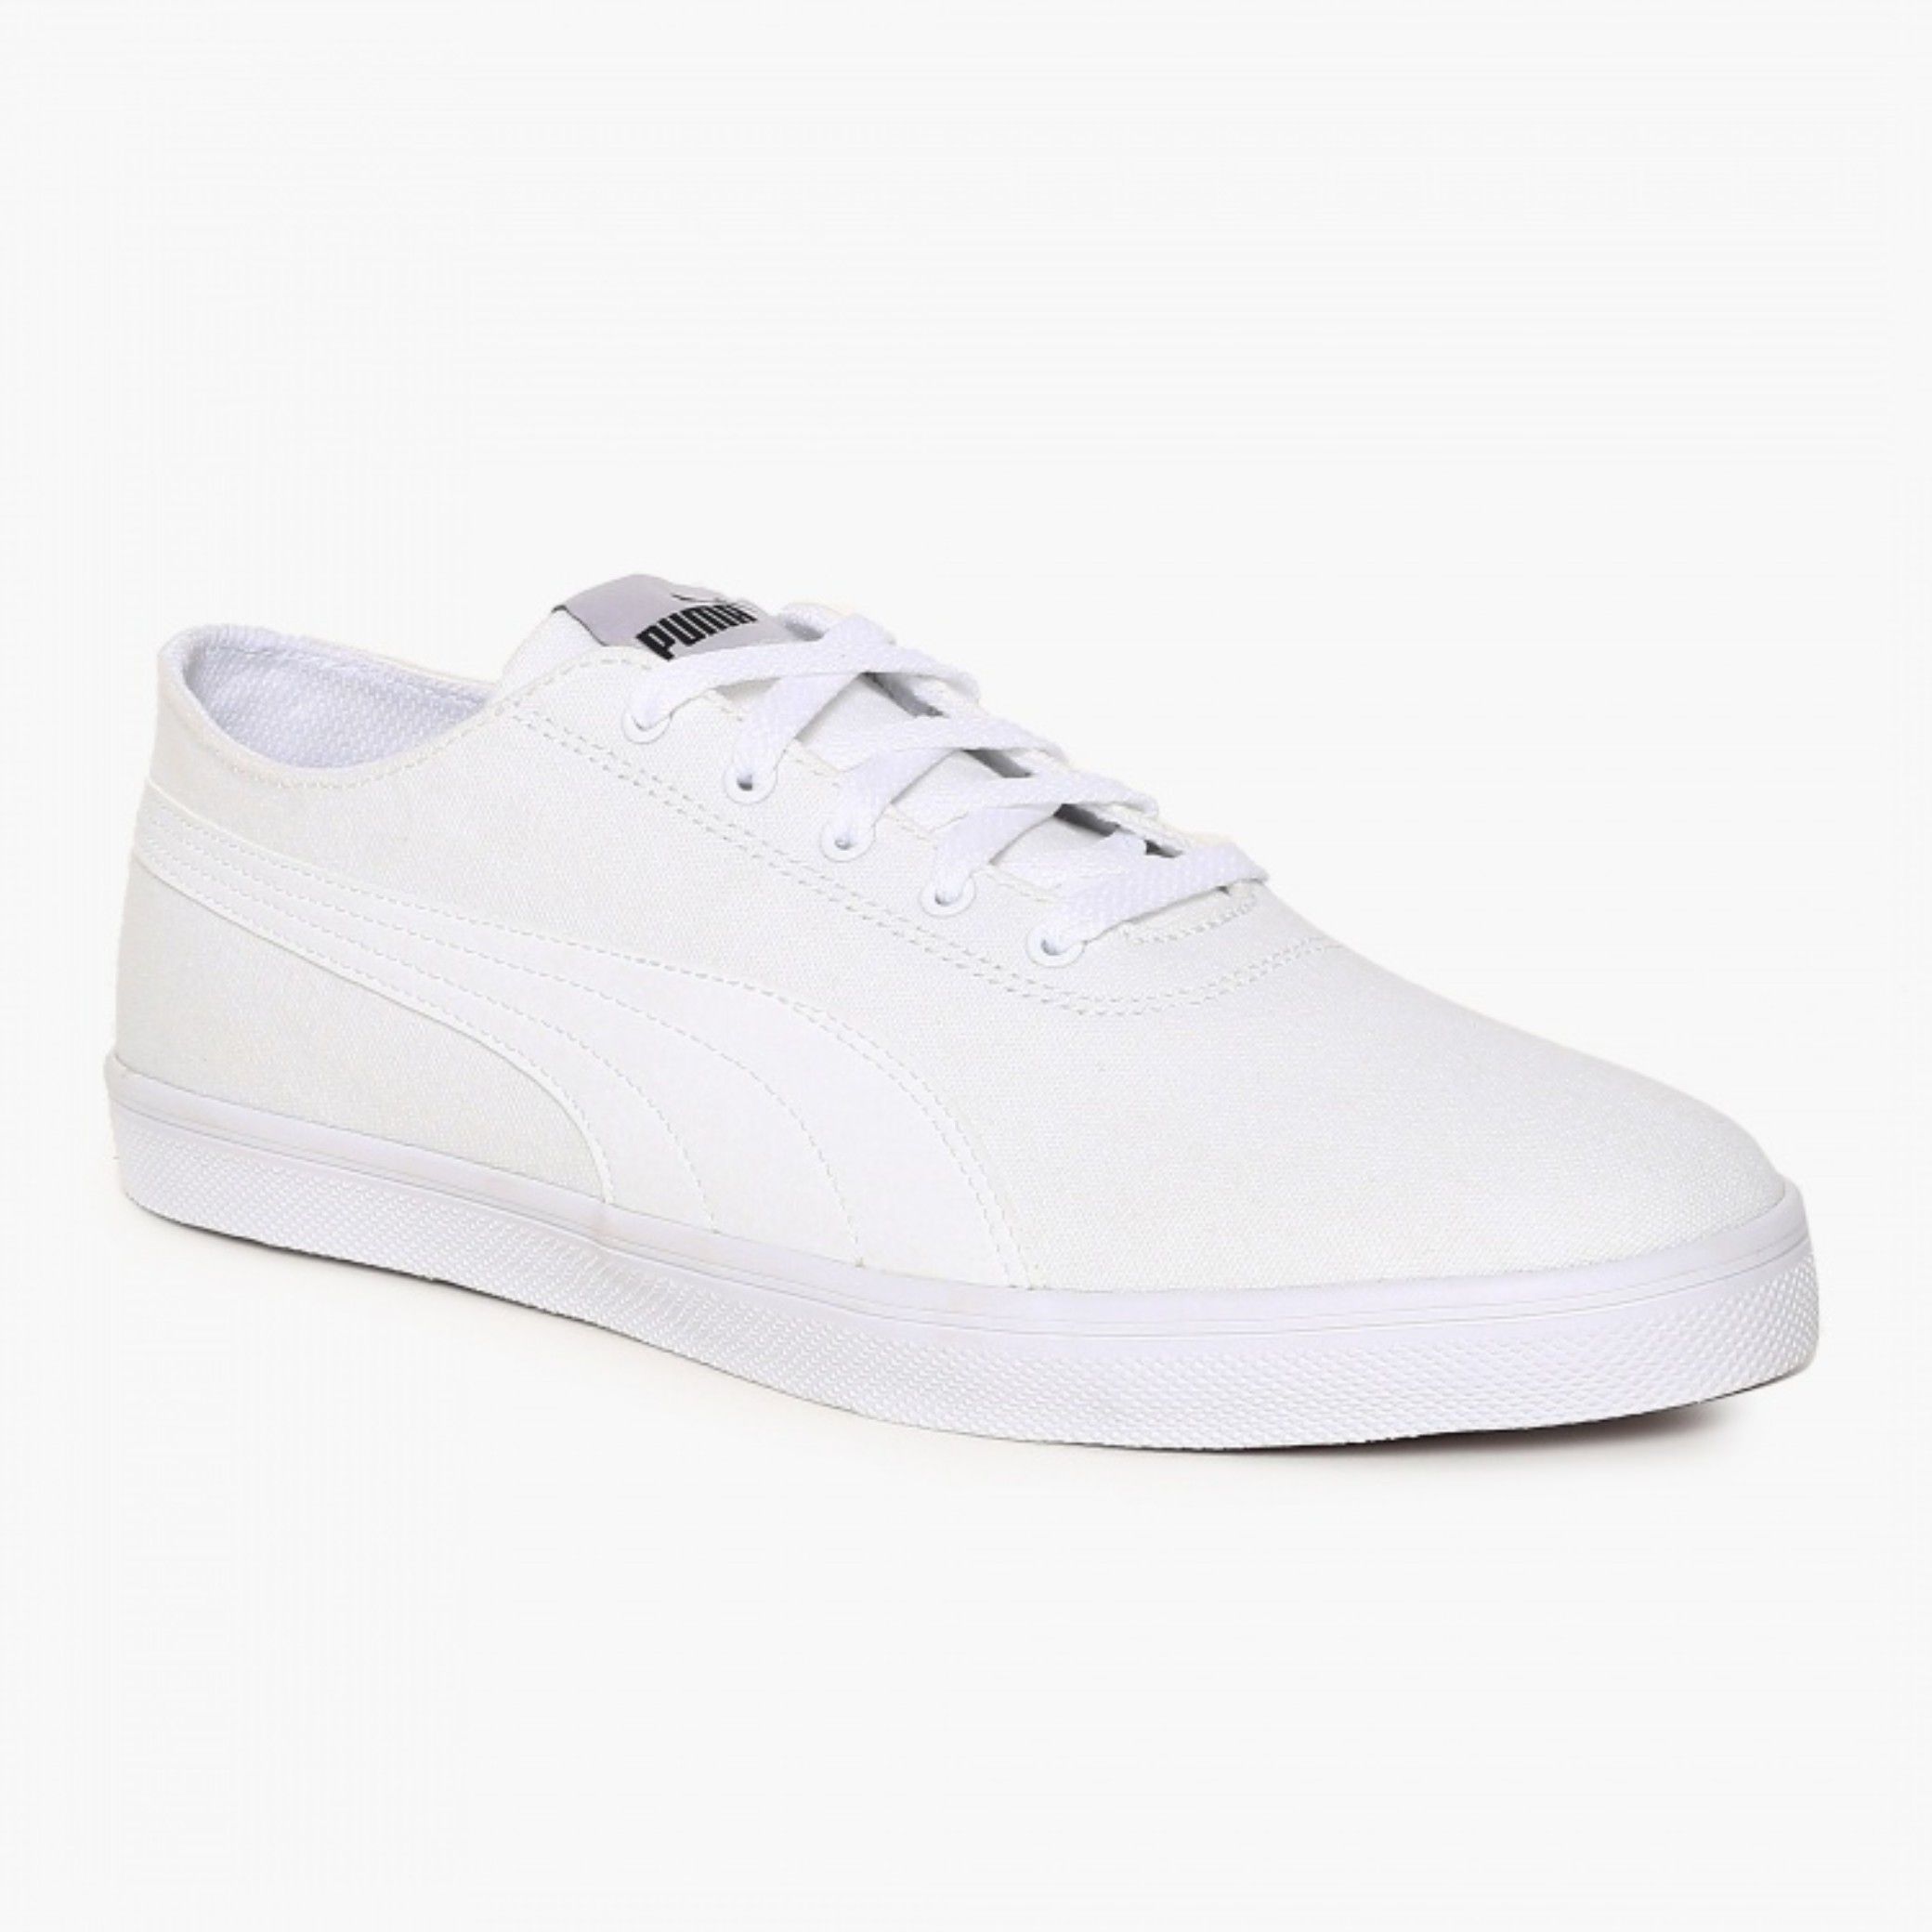 Puma Urban Sneakers White Casual Shoes 